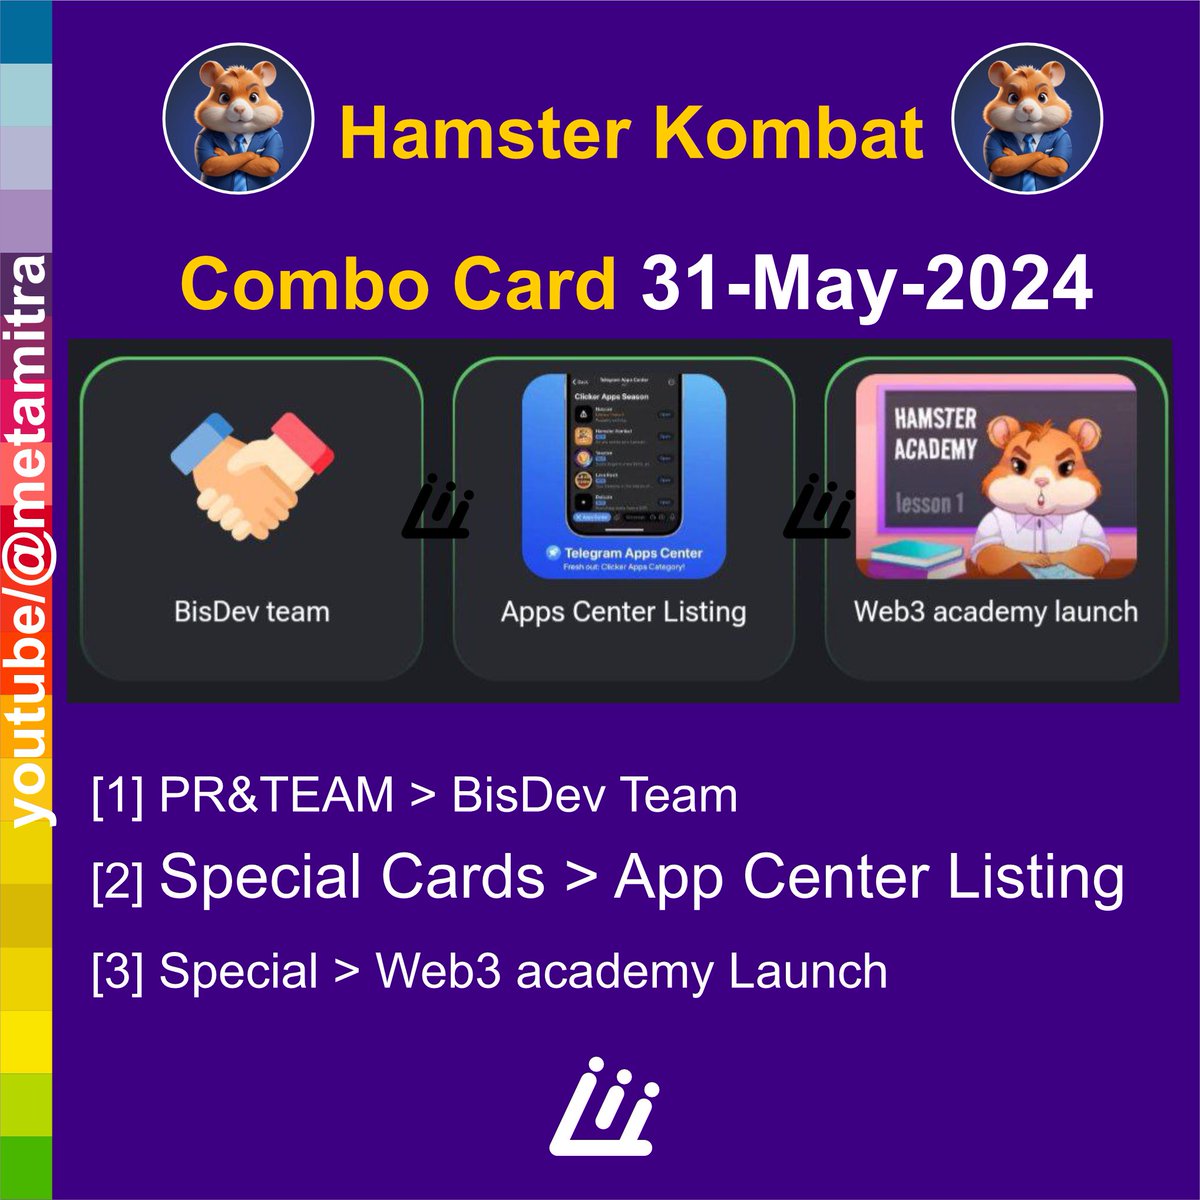 Hamster Kombat Combo Card 31-May-2024.  

हैम्स्टर कॉम्बेट क्या है ? Telegram गेम पॉइंट से क्रिप्टो फ्री में youtu.be/vTUPpwEZj8A

#hamstercombo #hamsterkombat #hamsterkombatcard #combocard